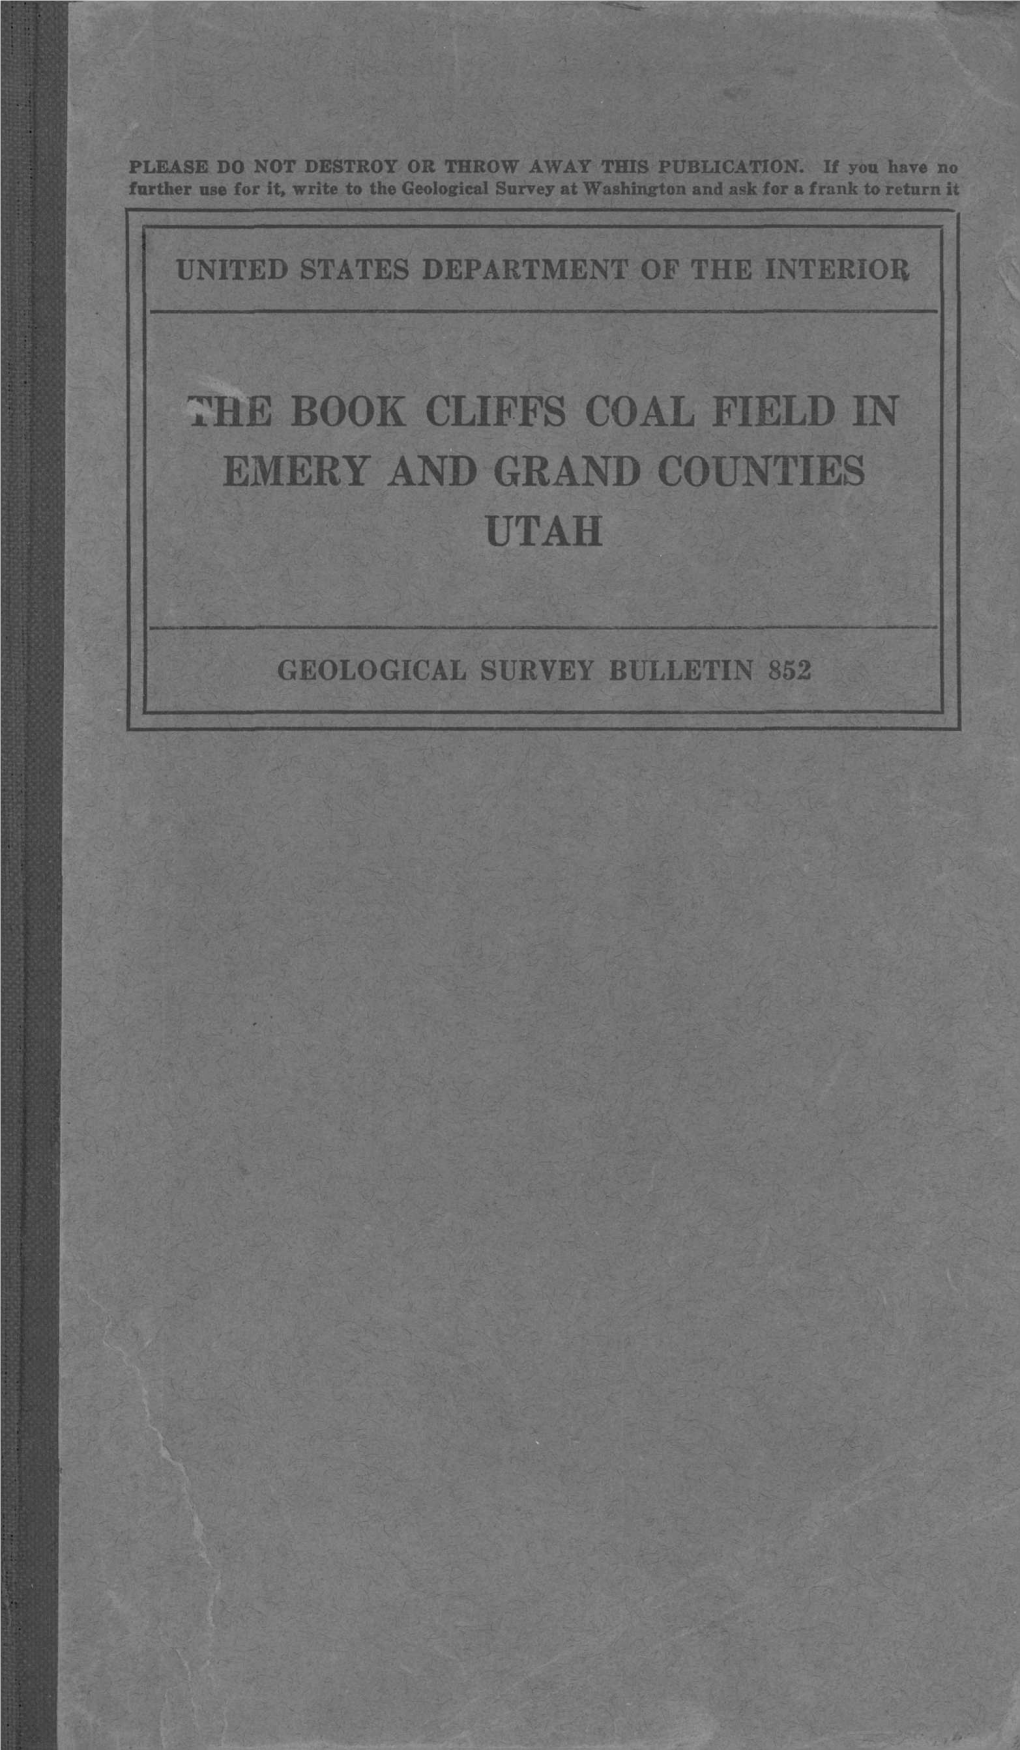 He Book Cliffs Coal Field in Emery and Grand Counties Utah